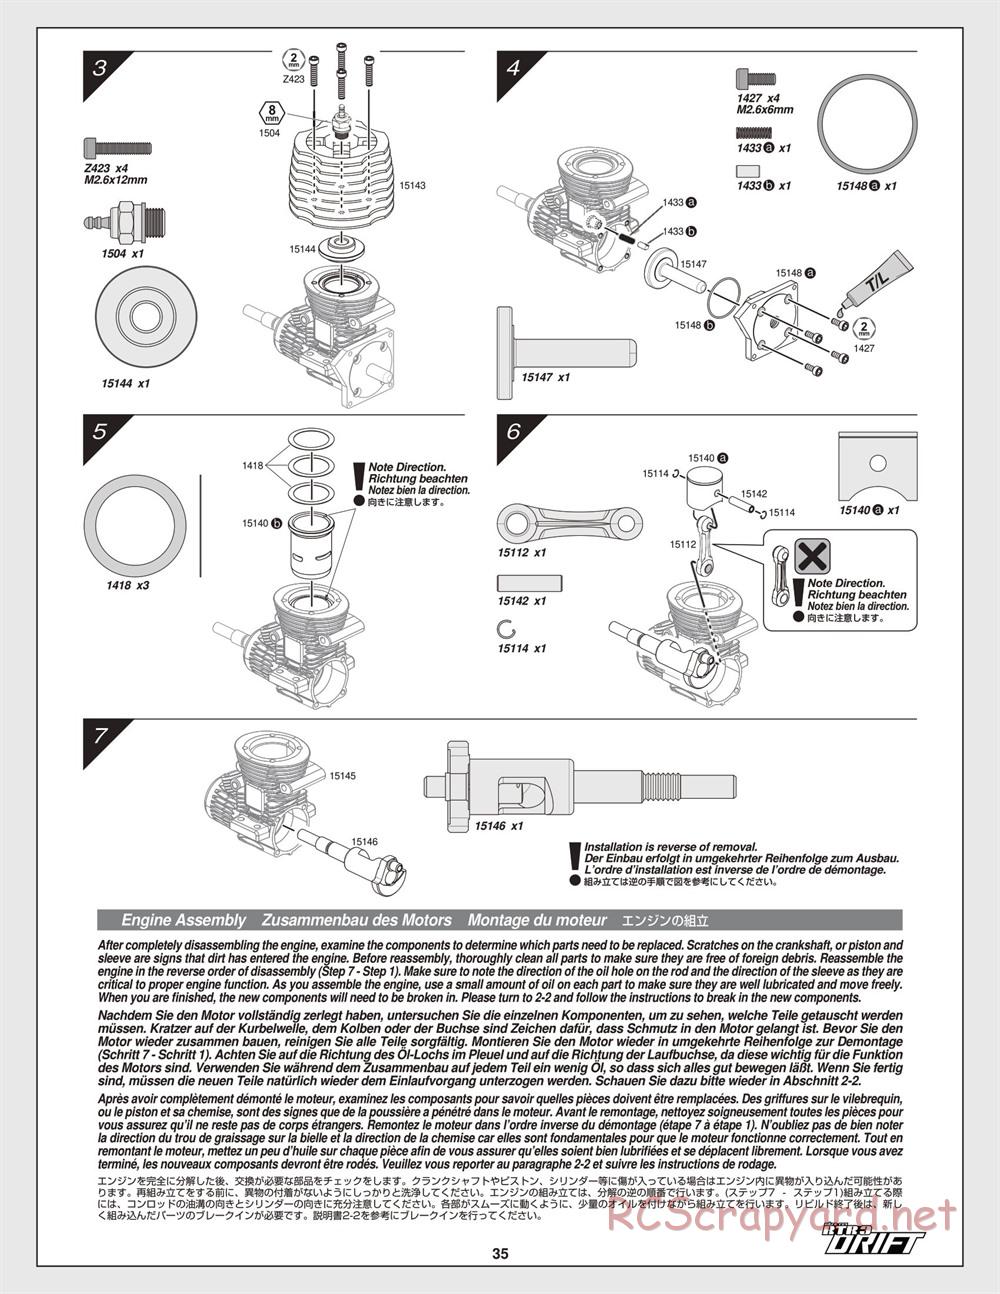 HPI - Nitro RS4 3 Drift - Manual - Page 35